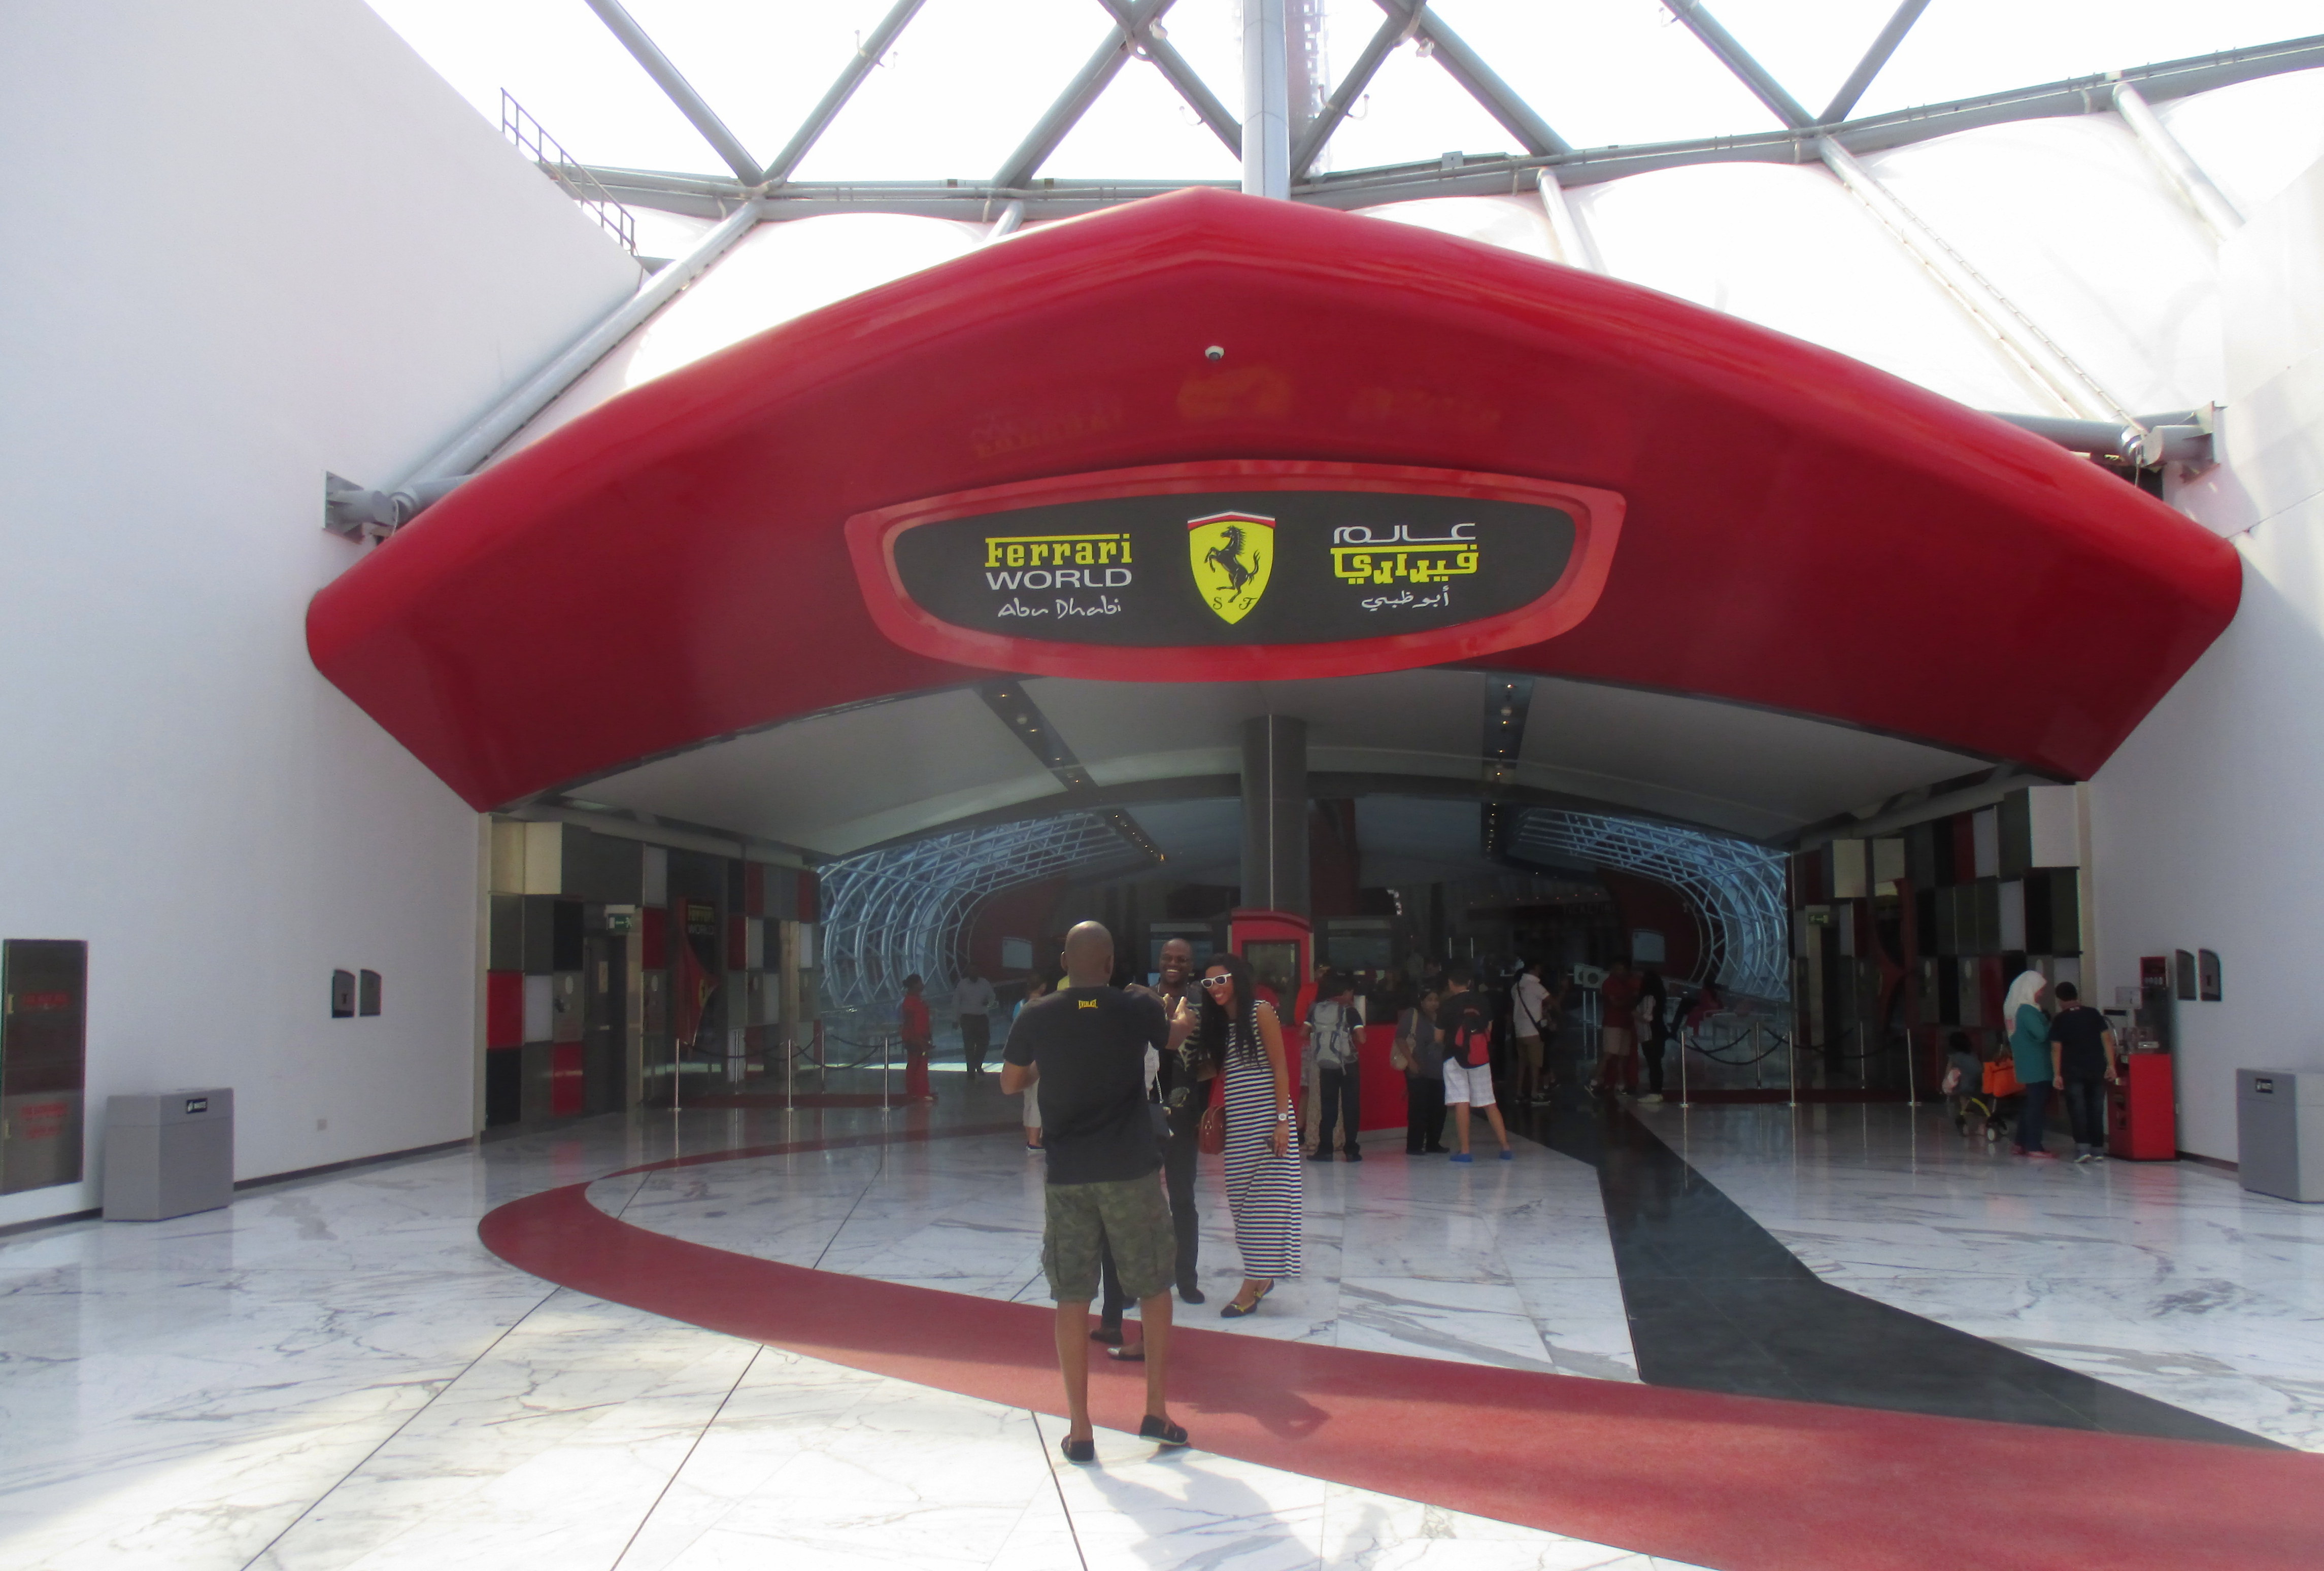 Der Eingang zum Ferrari World Park in Abu Dhabi 2014.